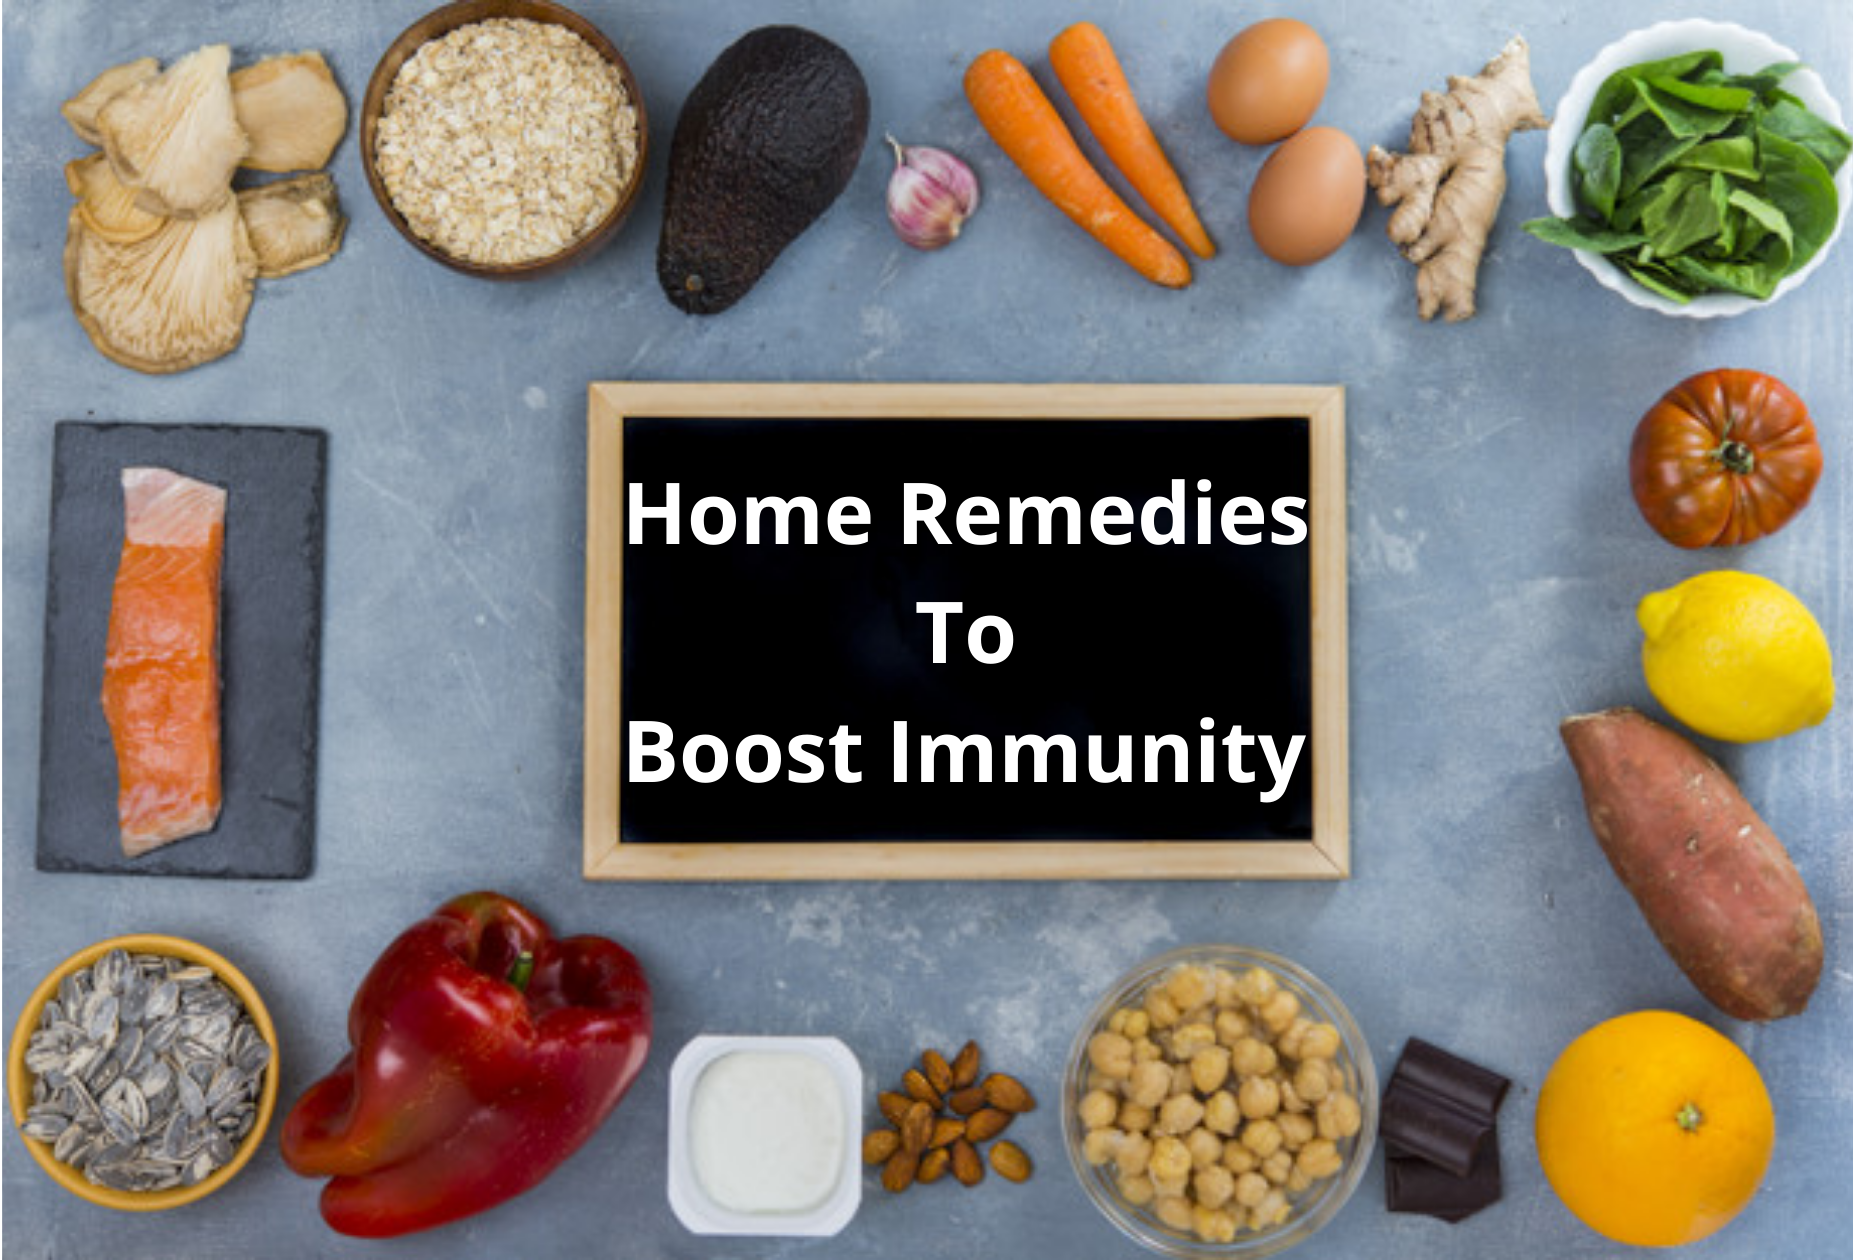 Immunity-boosting remedies